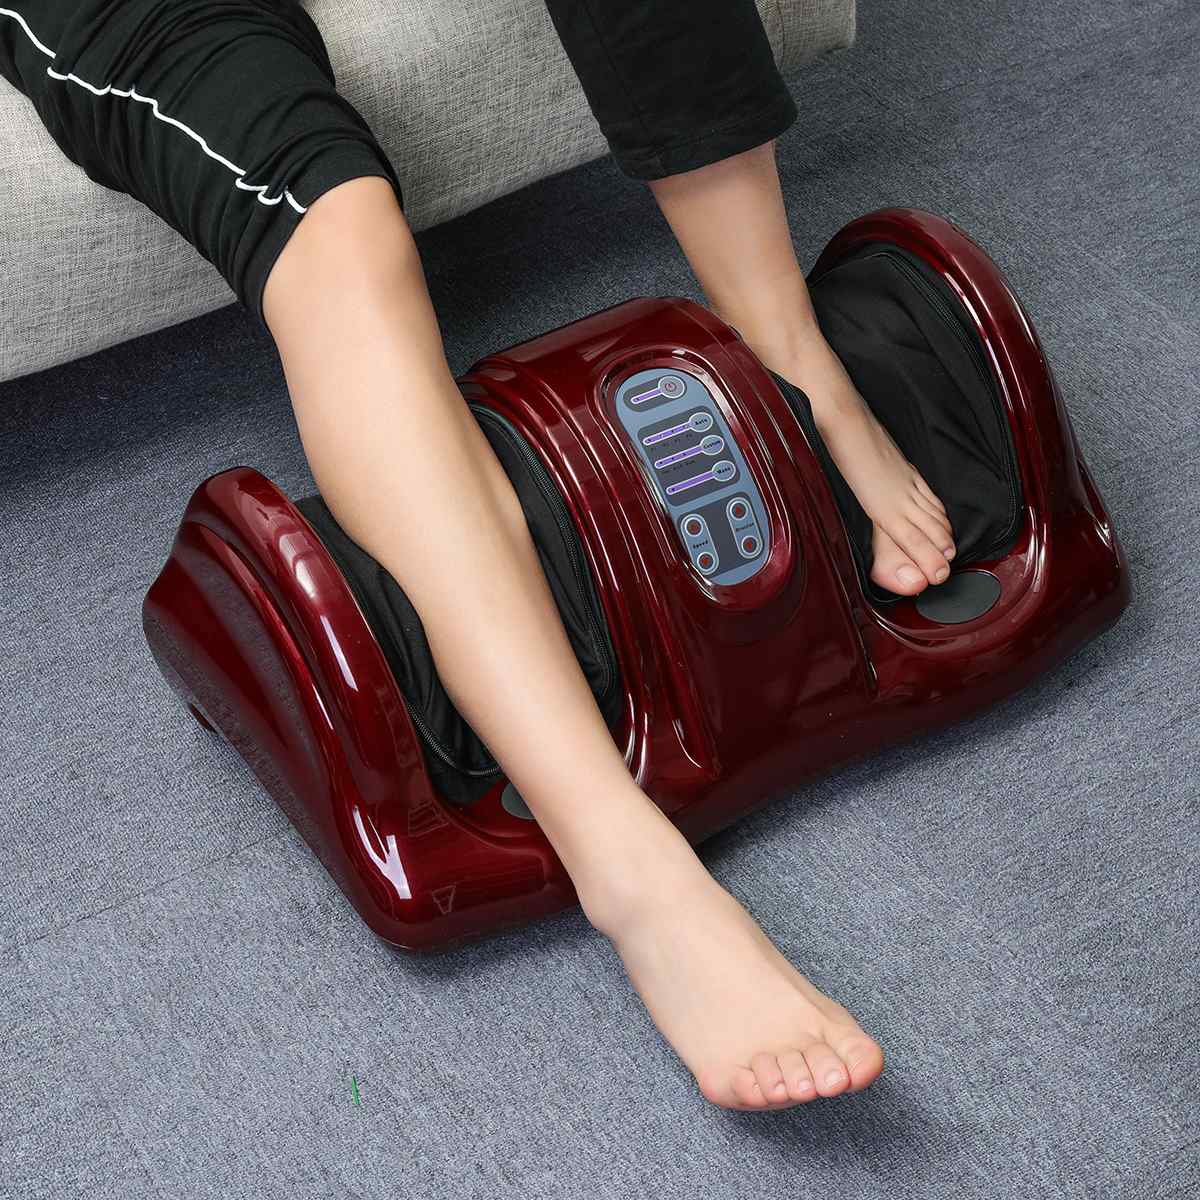 Foot Leg And Calf Shiatsu Massager With Heating 0609